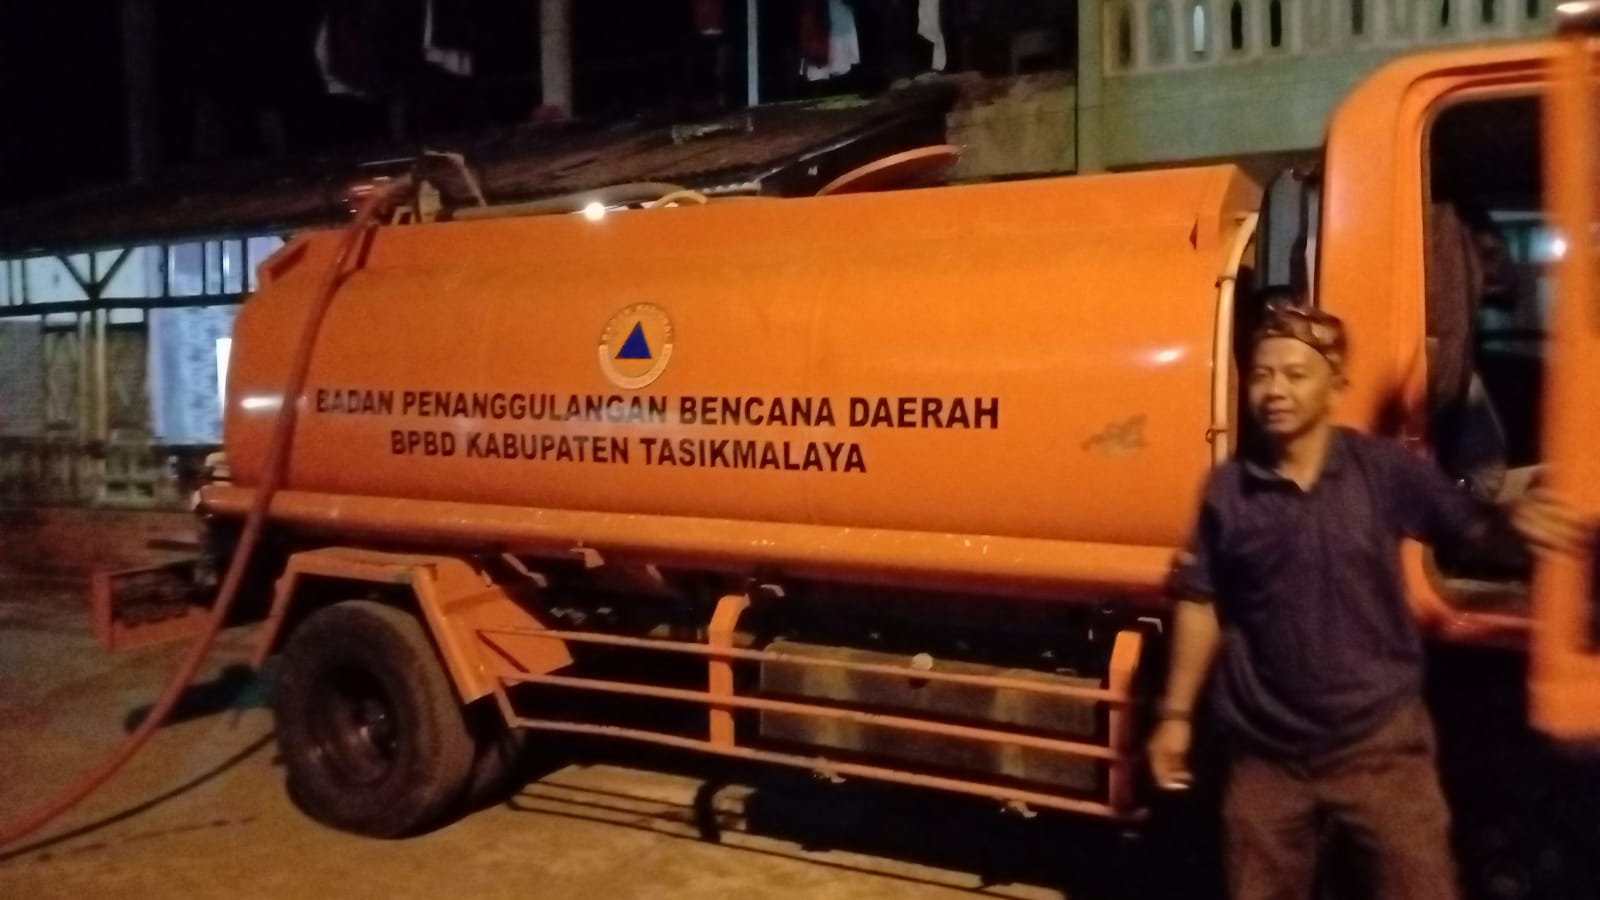 Kekurangan Pasokan Air Bersih di Cipatujah Tasikmalaya, Warga Terpaksa Membeli dengan Harga Tinggi